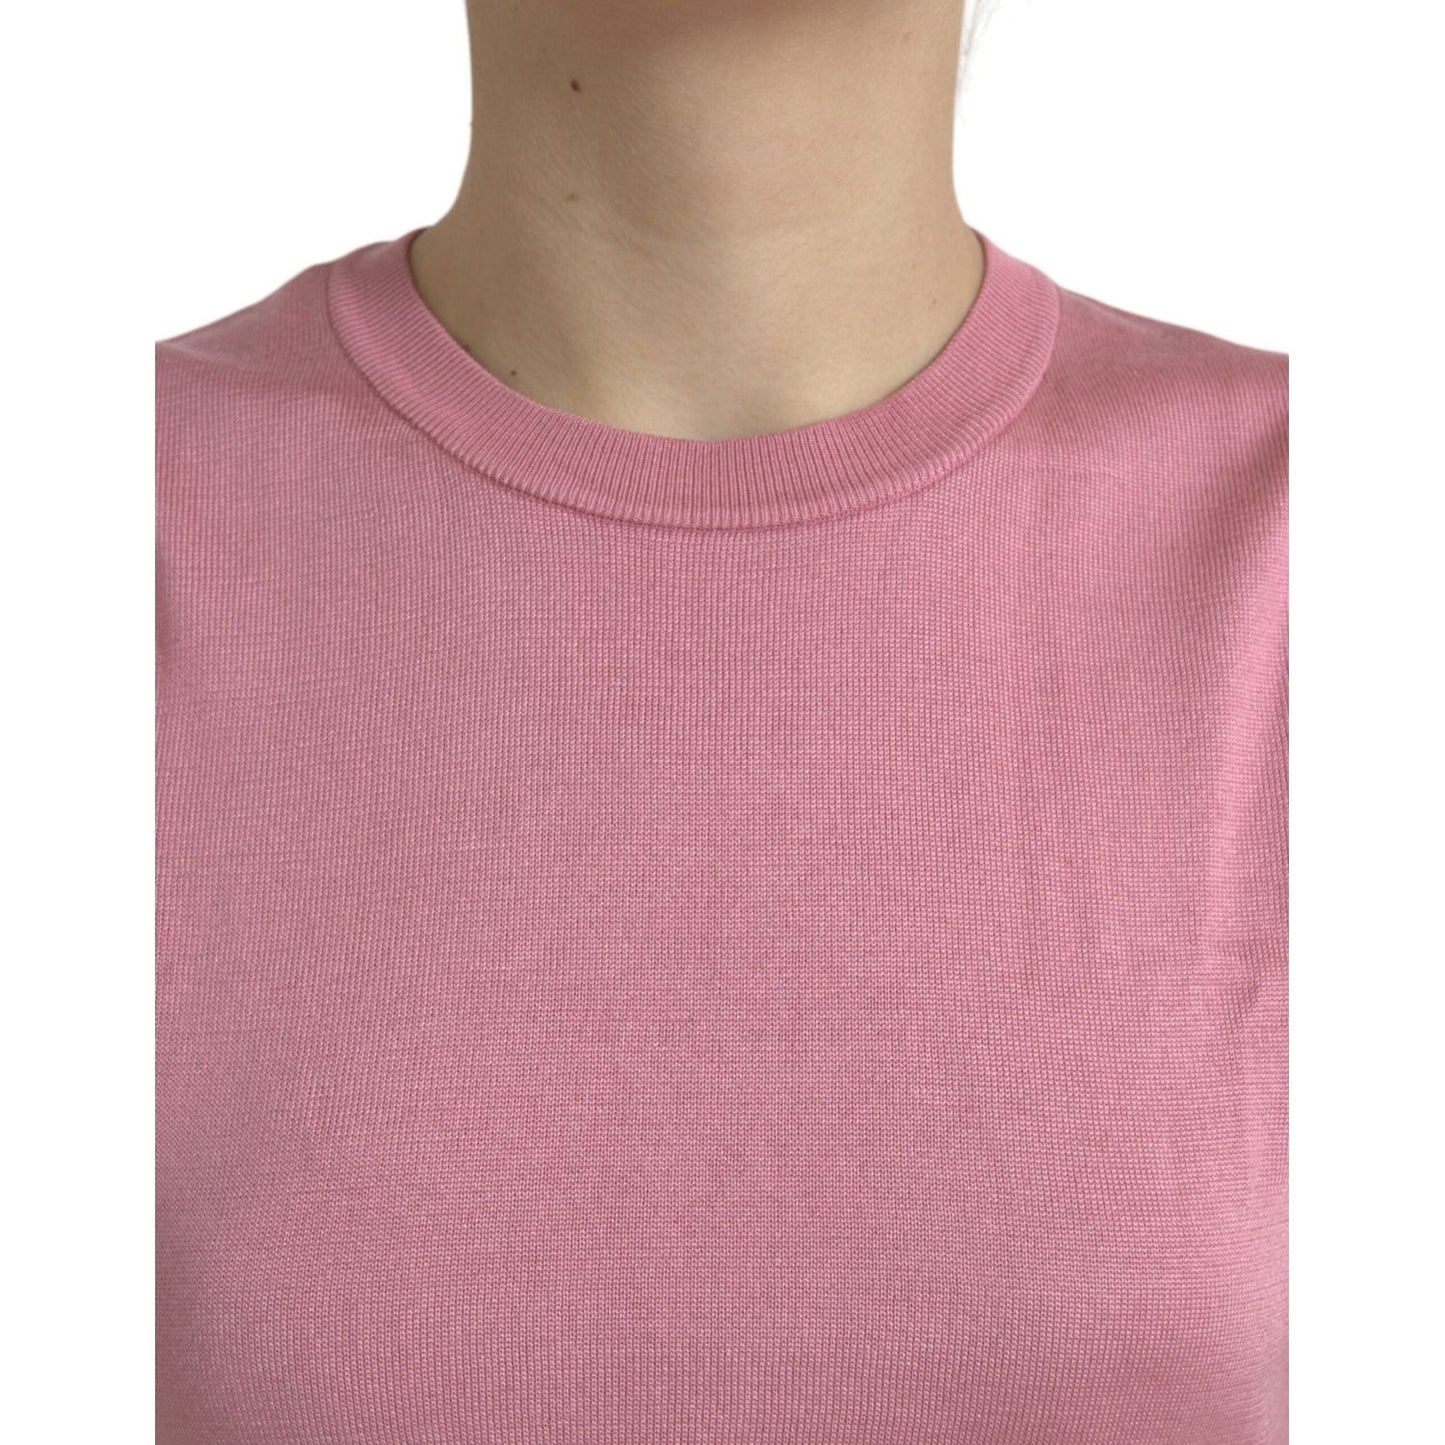 Dolce & Gabbana Elegant Silk Crew Neck Cropped Tank Top pink-crew-neck-cropped-sleeveless-tank-top